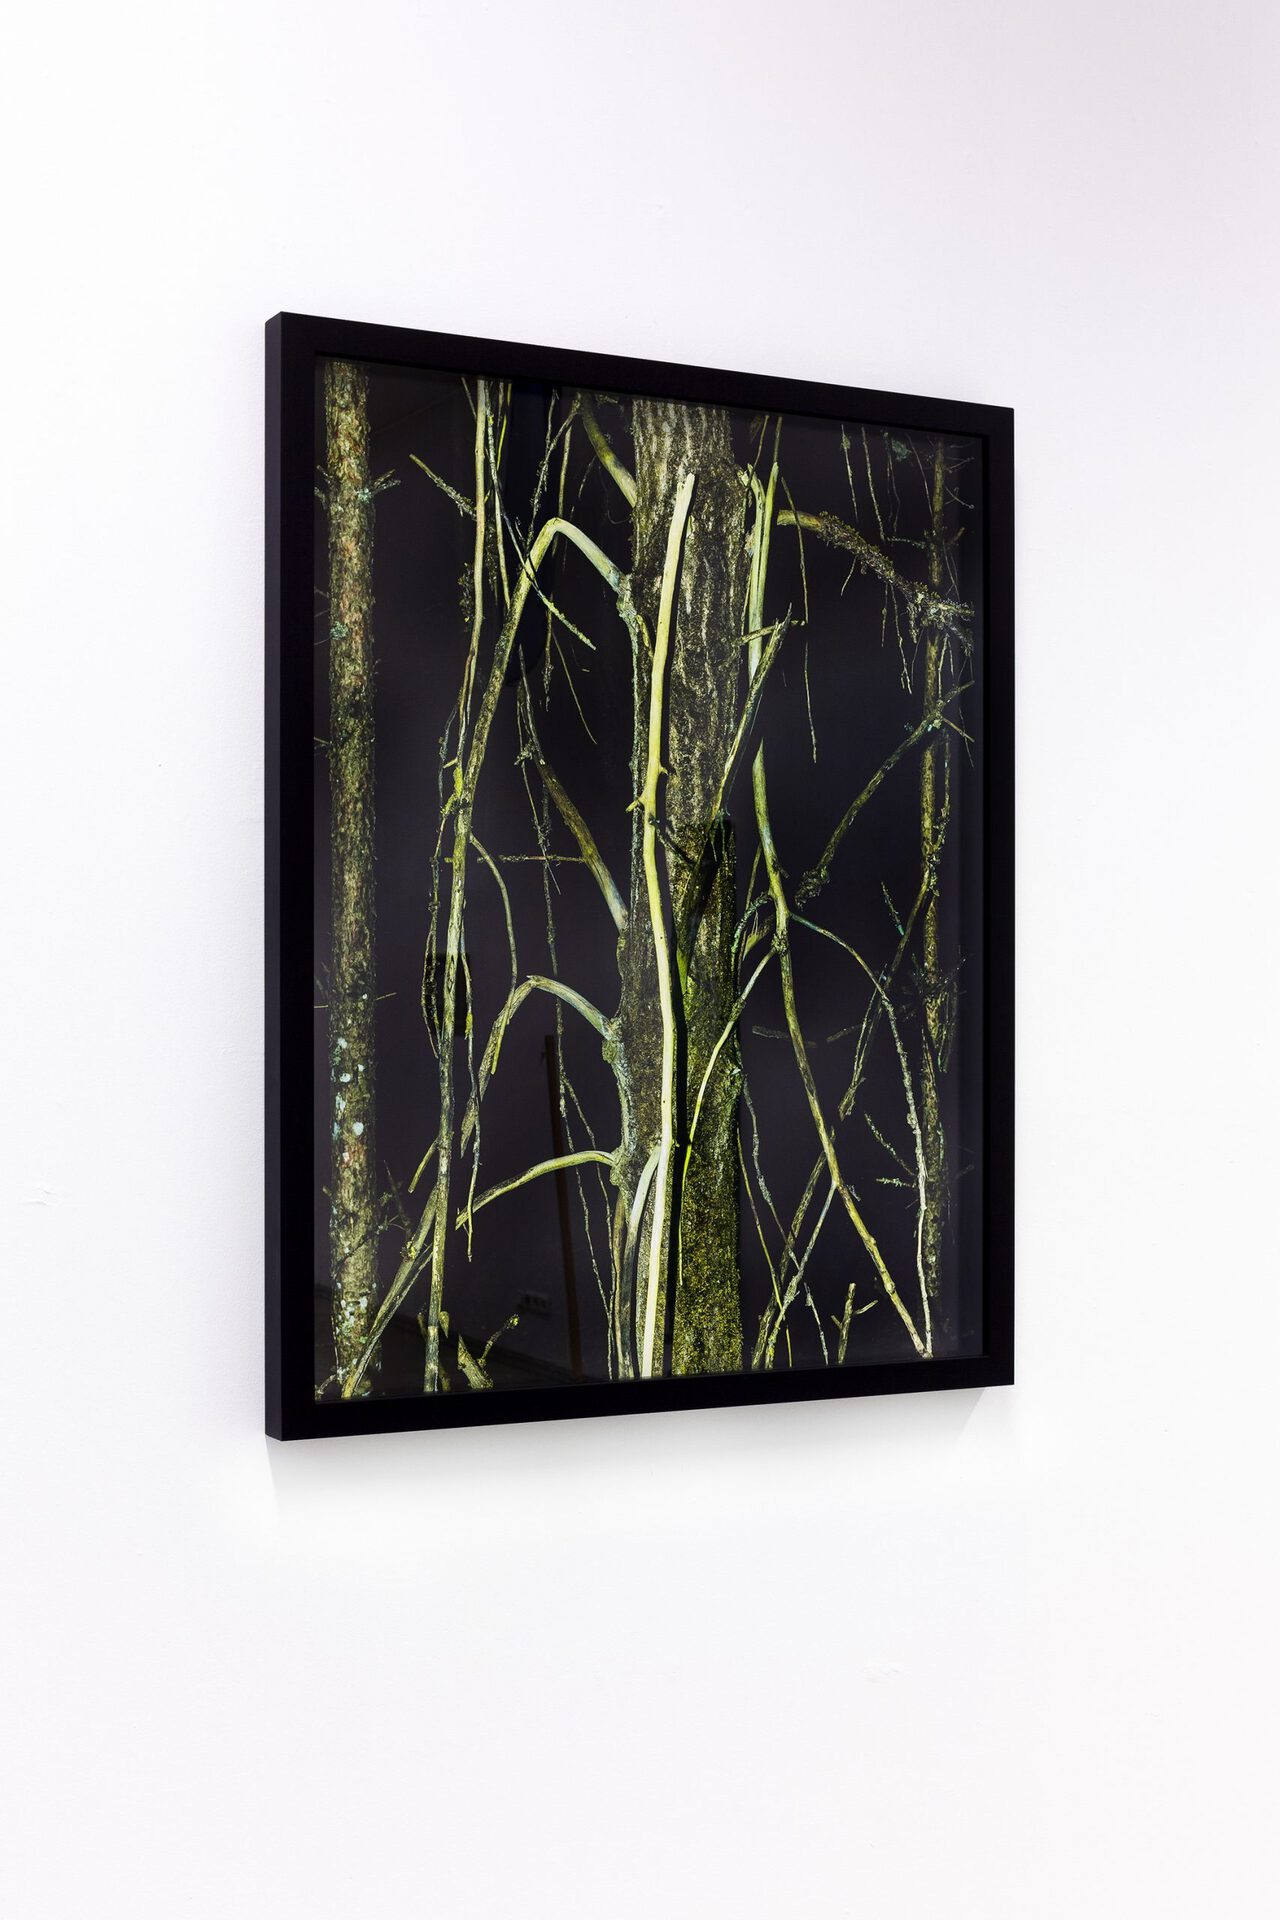 12 Roman-Sten Tõnissoo. Forever Green Is the Tree of Life, 2022, framed pigment print, 70 x 90 cm. Photo by Roman-Sten Tõnissoo